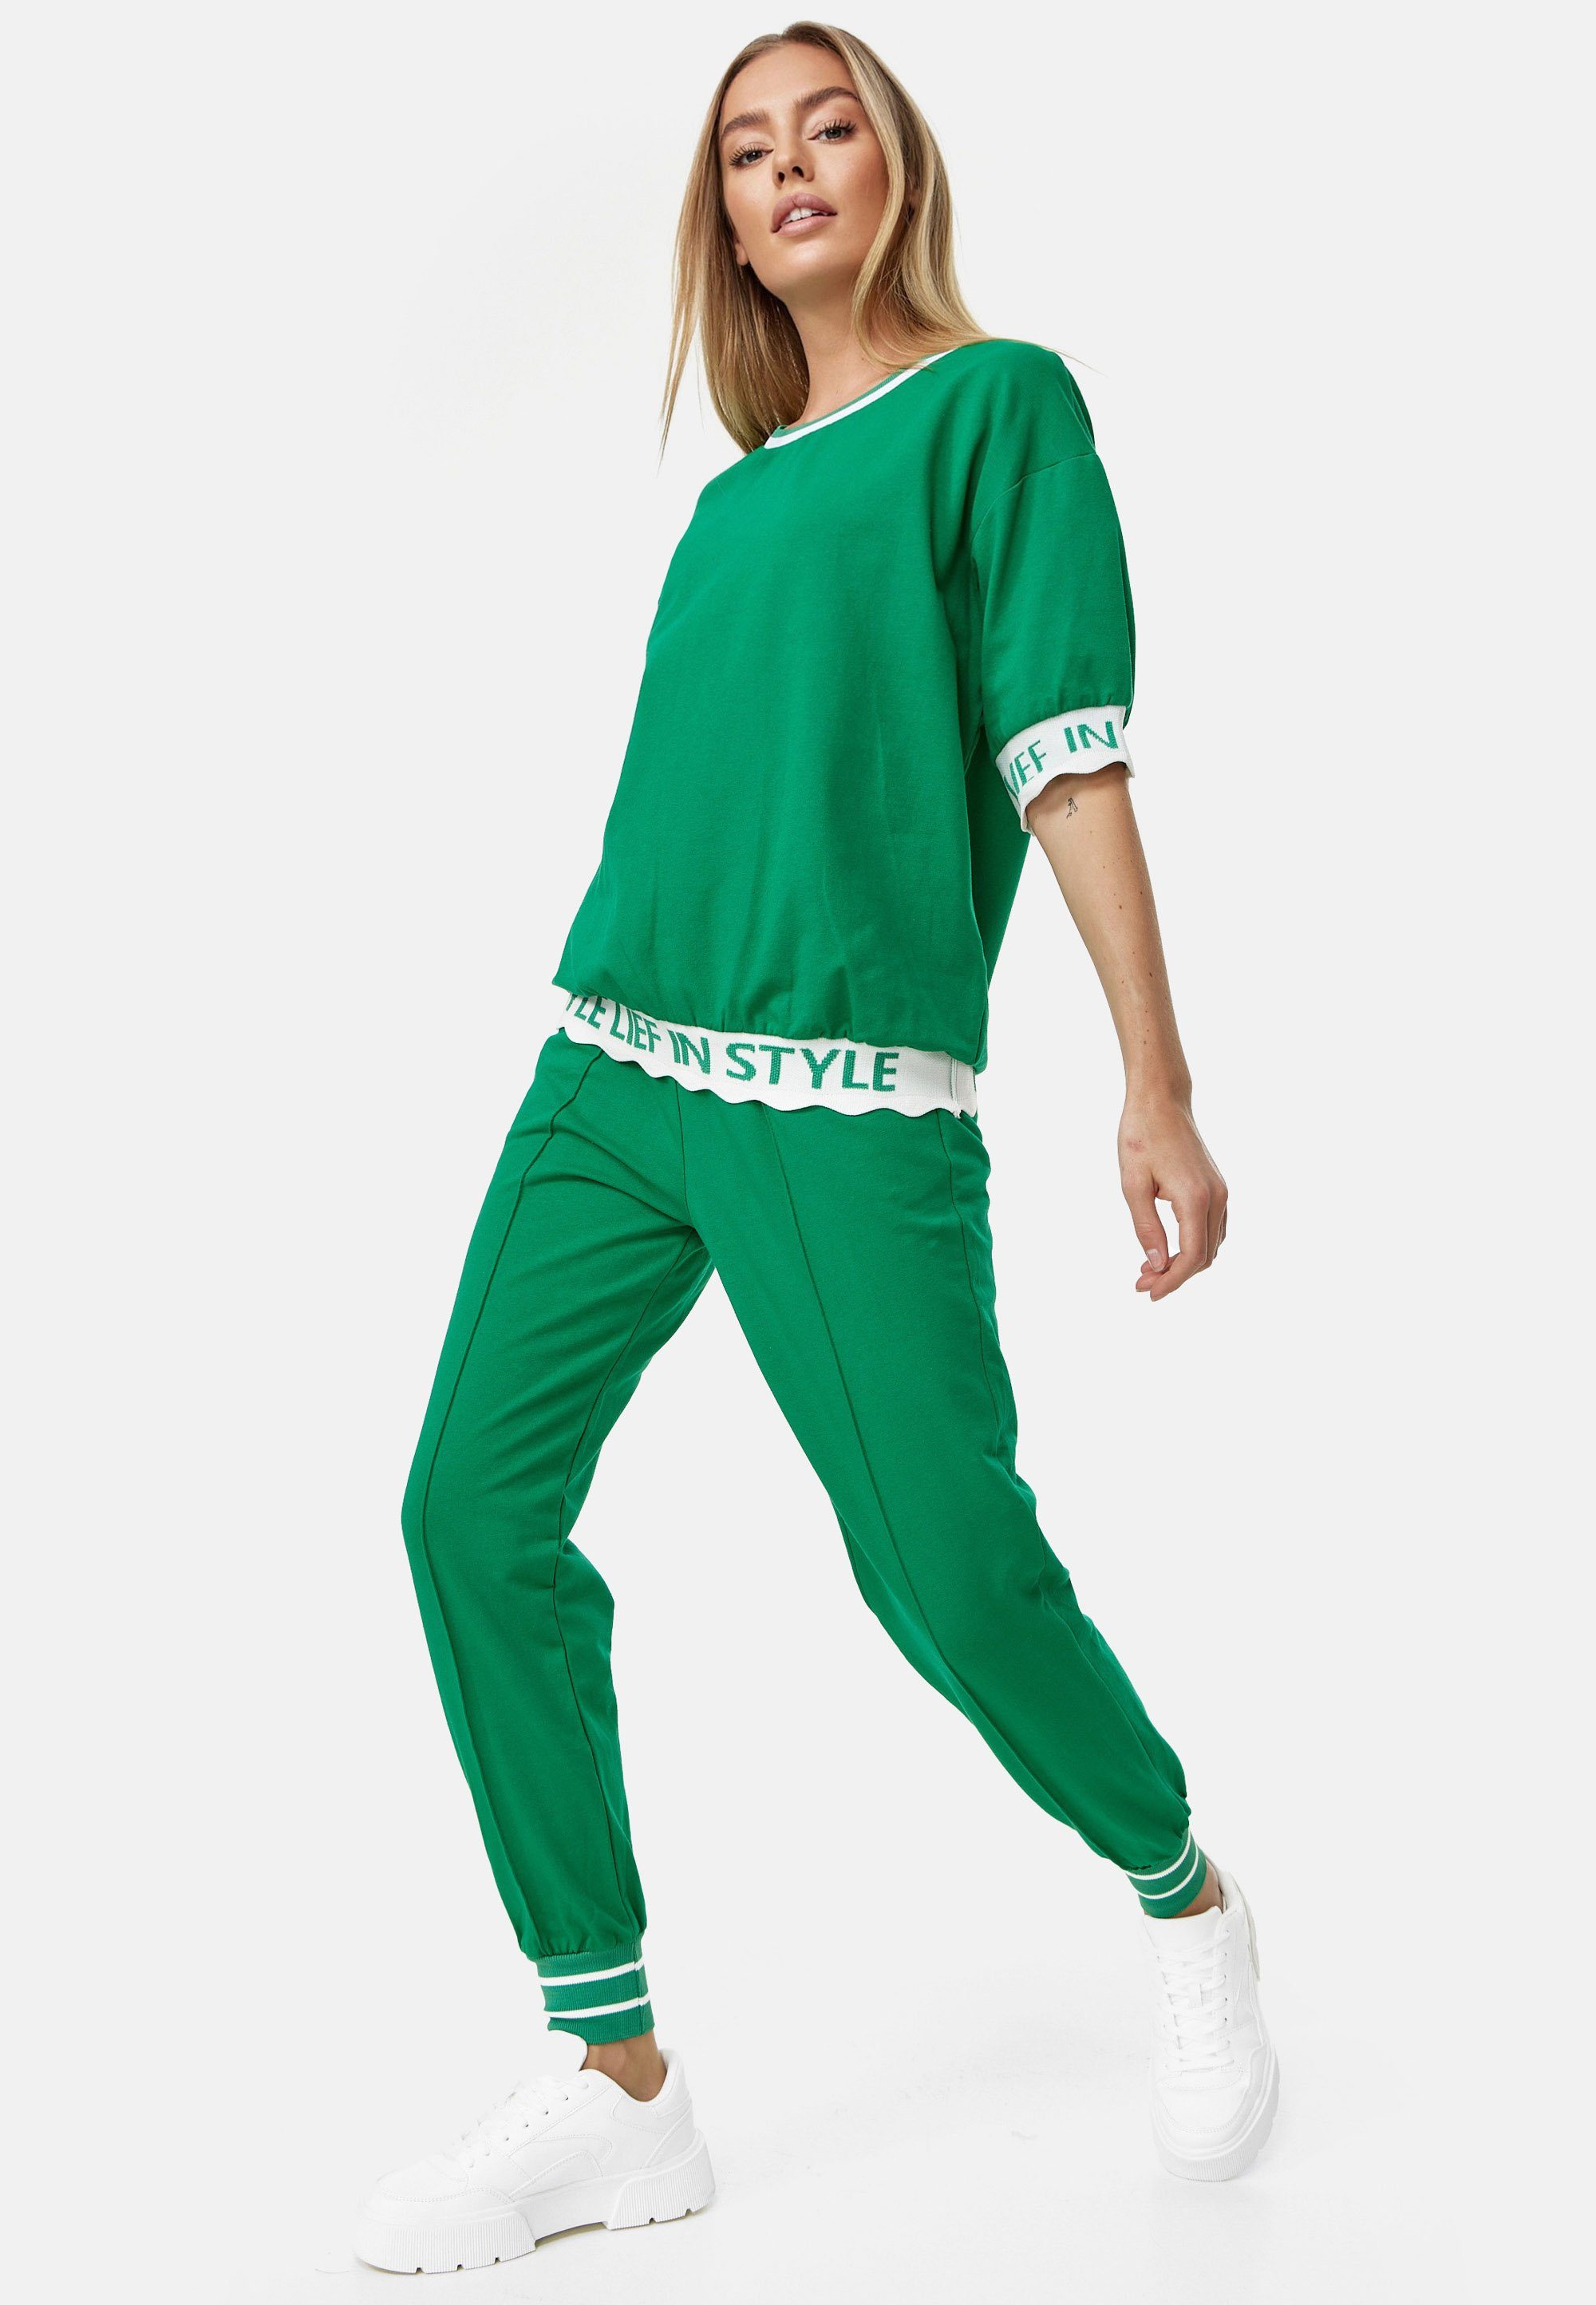 stylishem T-Shirt grün Schriftzug mit Decay